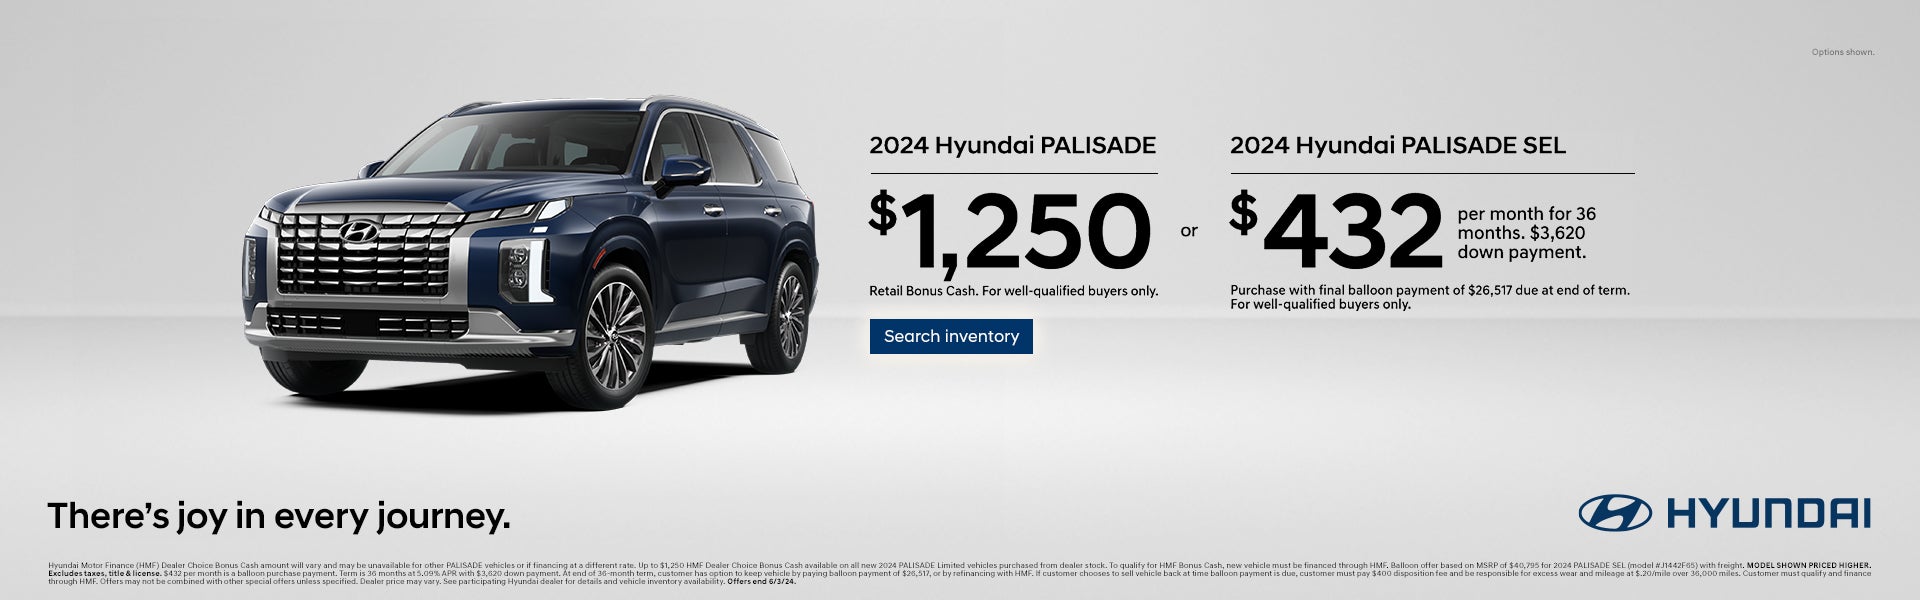 2024 Hyundai Palisade Lease Promo